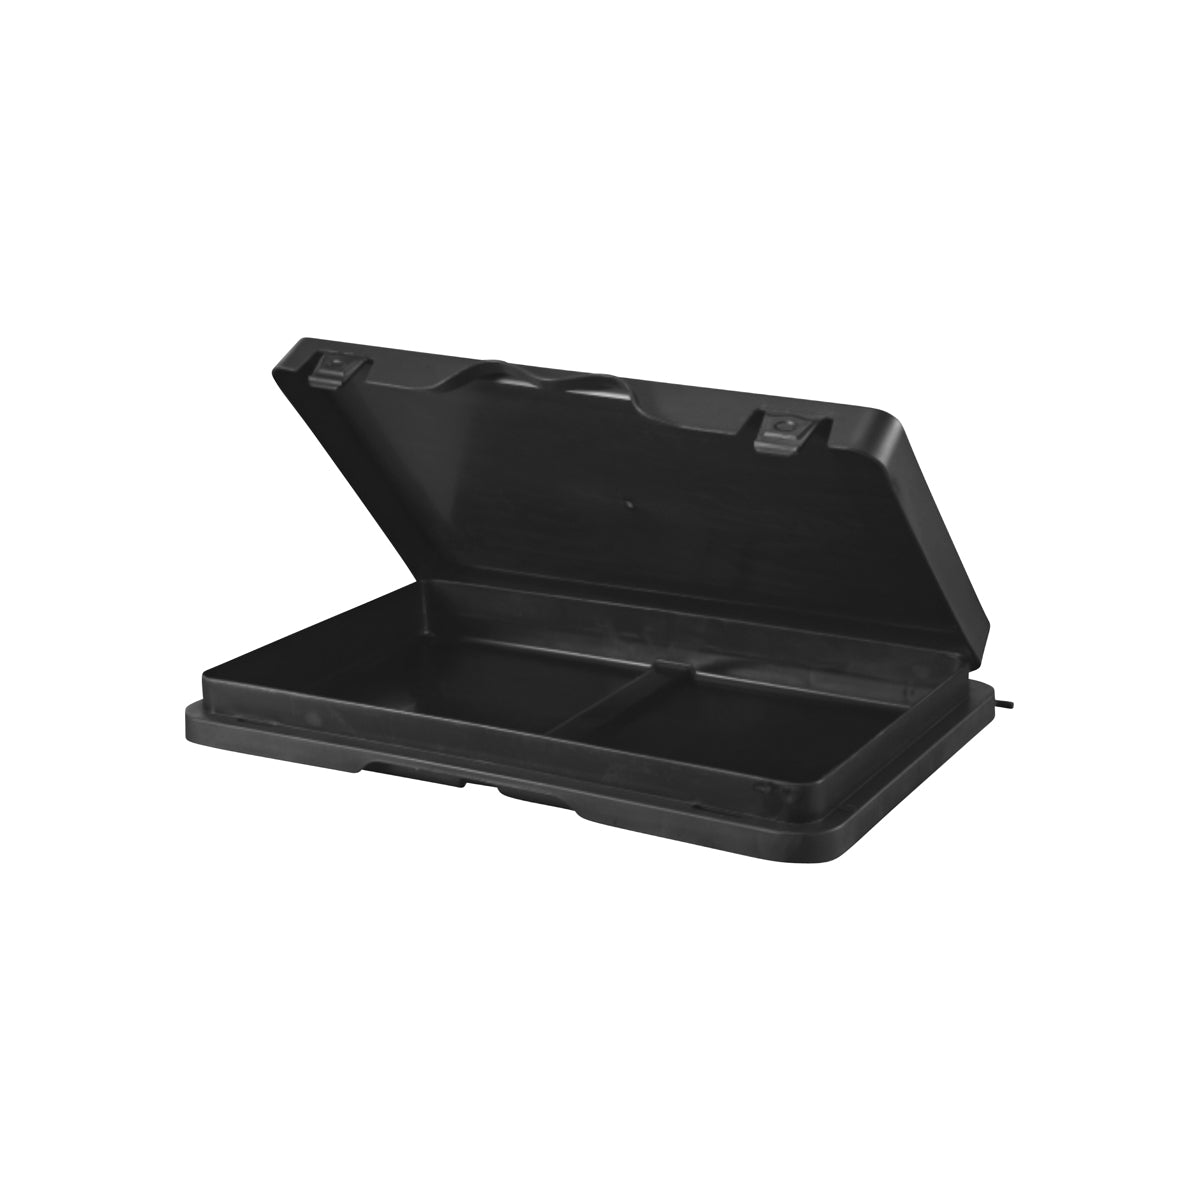 JW-CCSB Jiwins Storage Box with Lid Black 460x280x45mm Tomkin Australia Hospitality Supplies